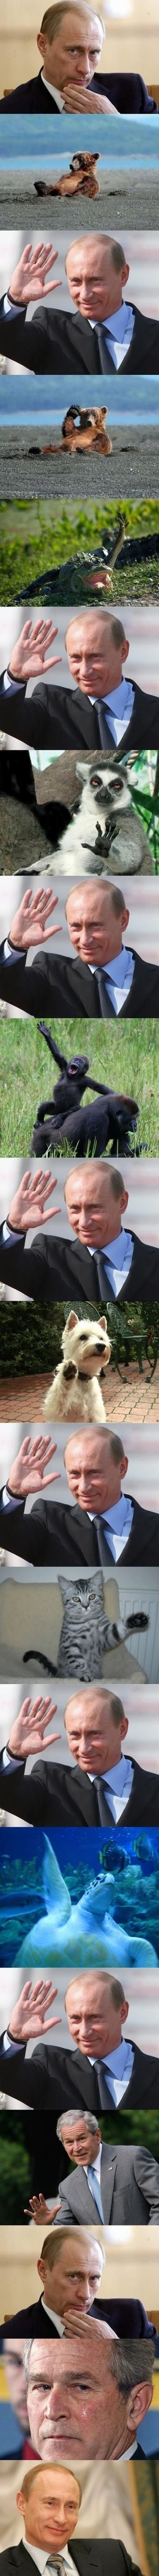 Putin waves everybody